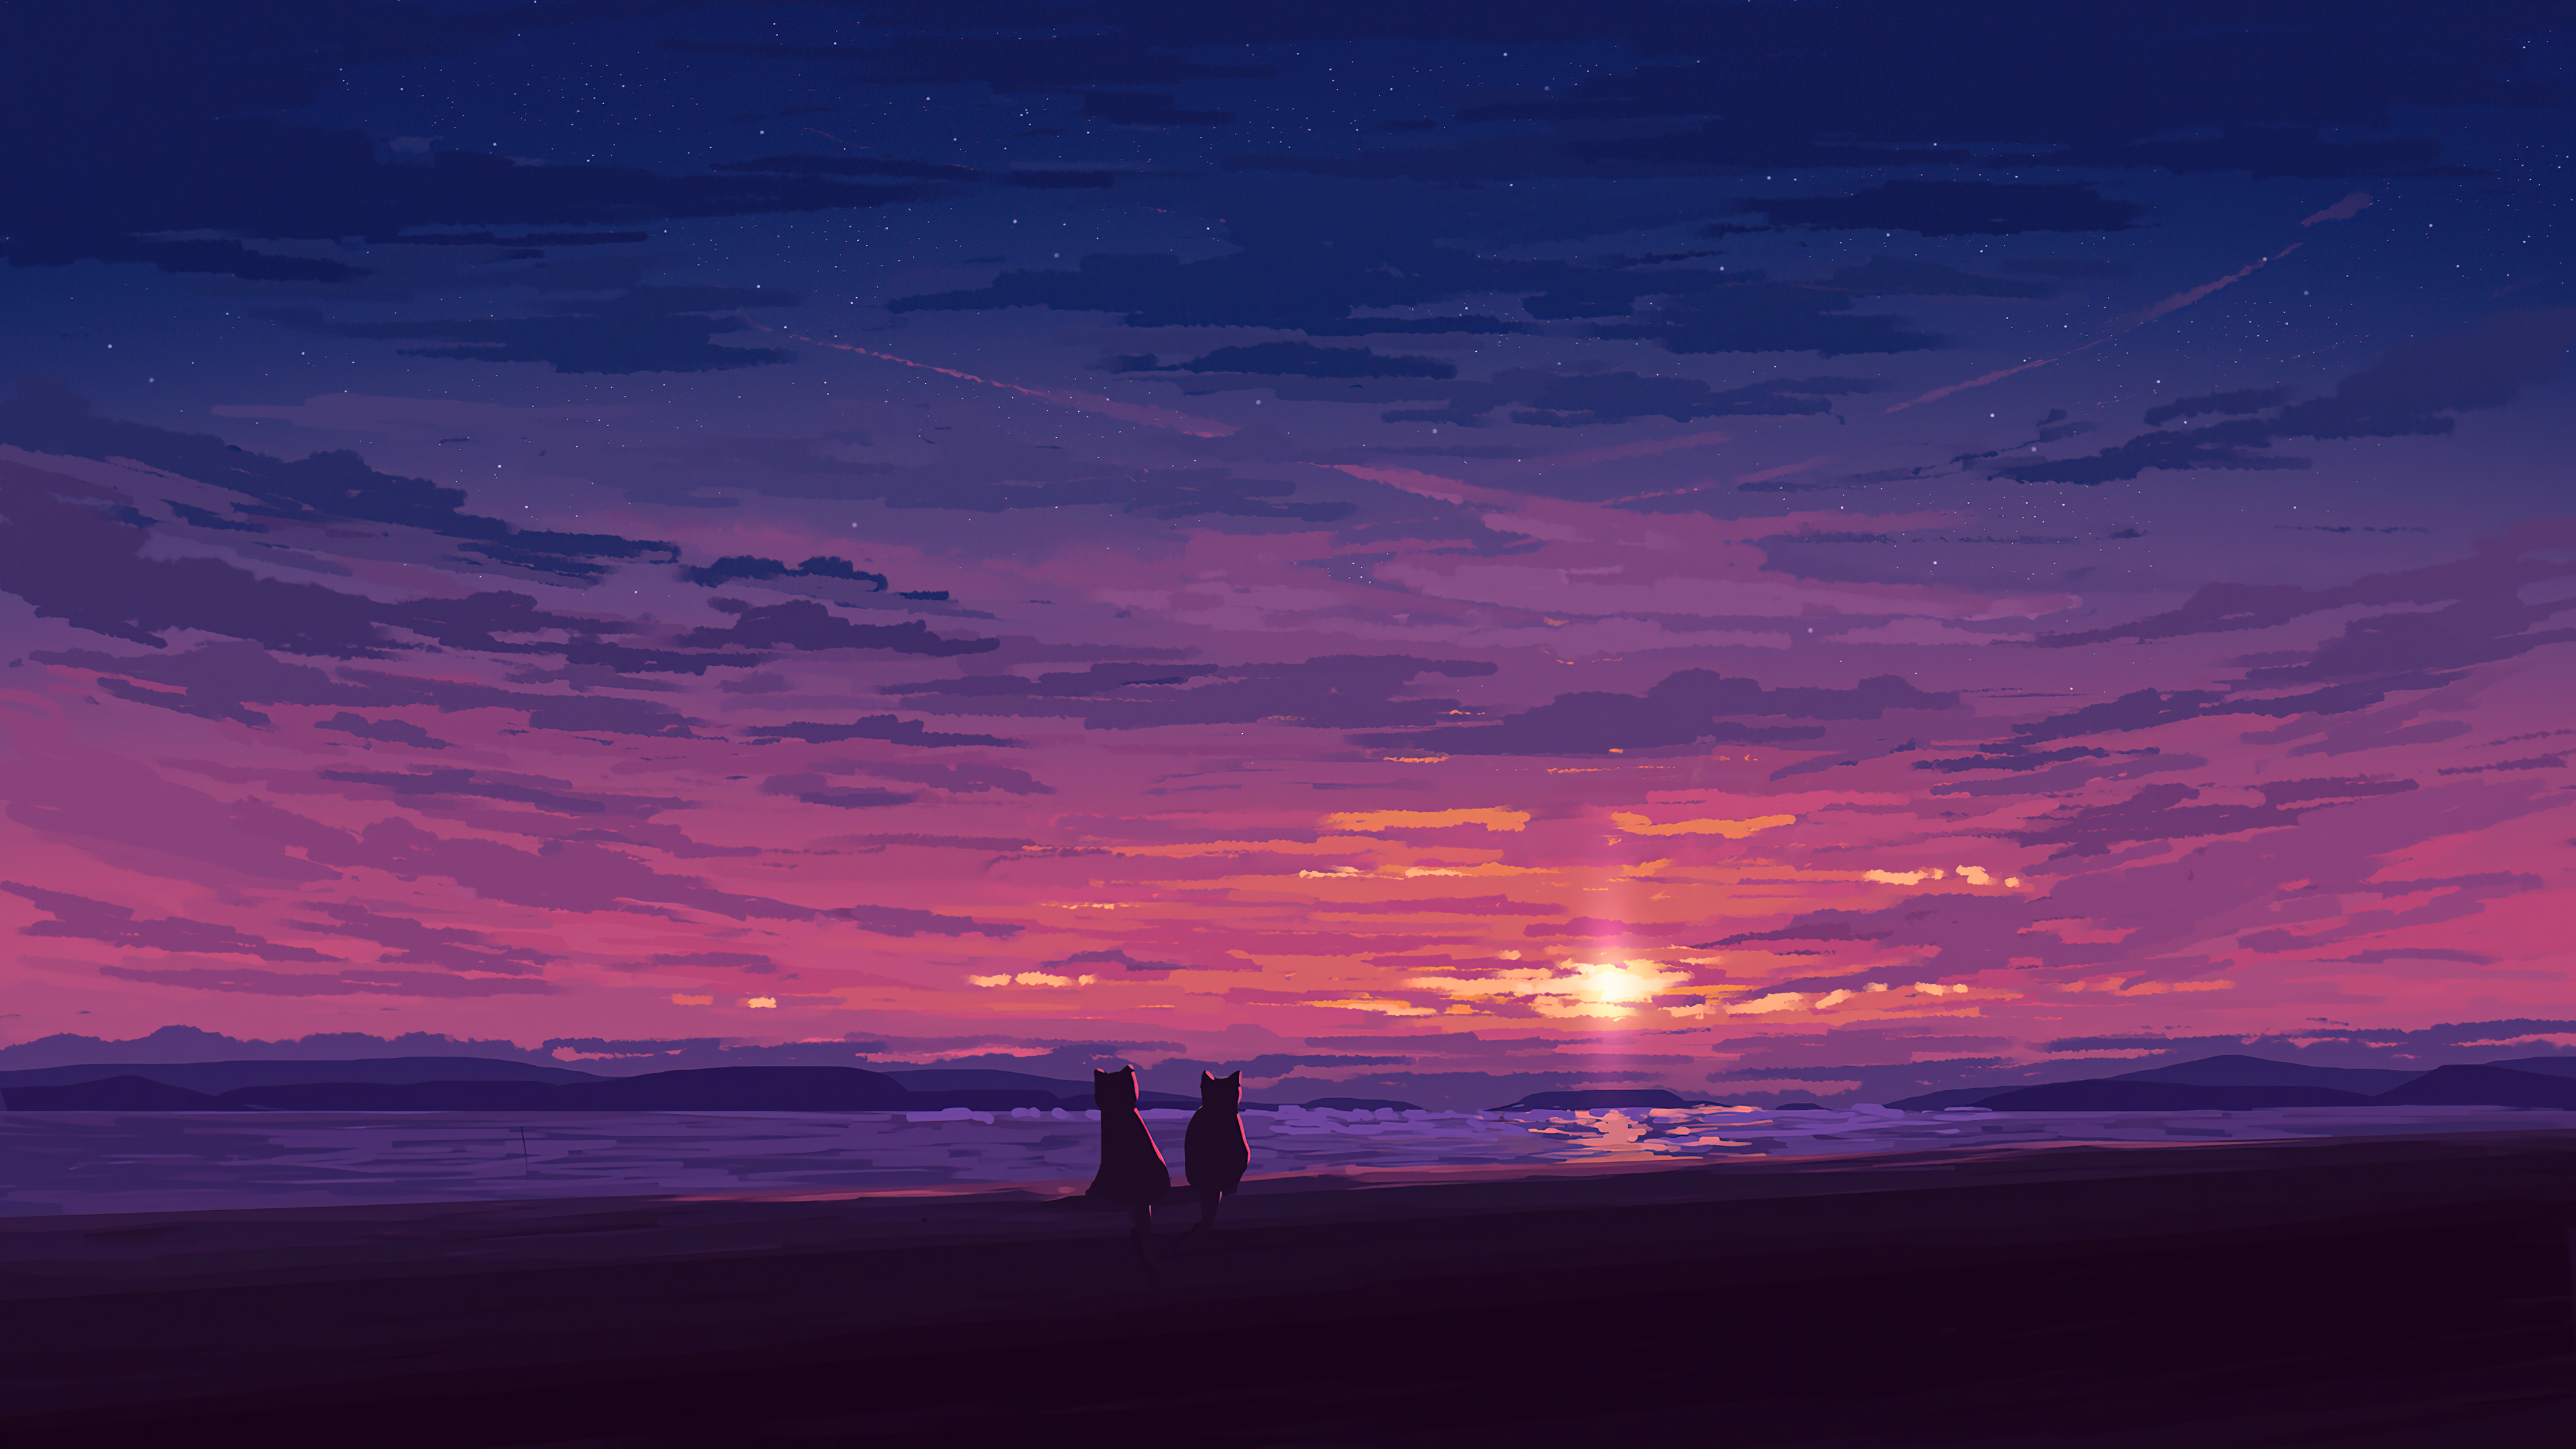 Sunset at the beach Digital Art Wallpaper 4k Ultra HD ID:7260